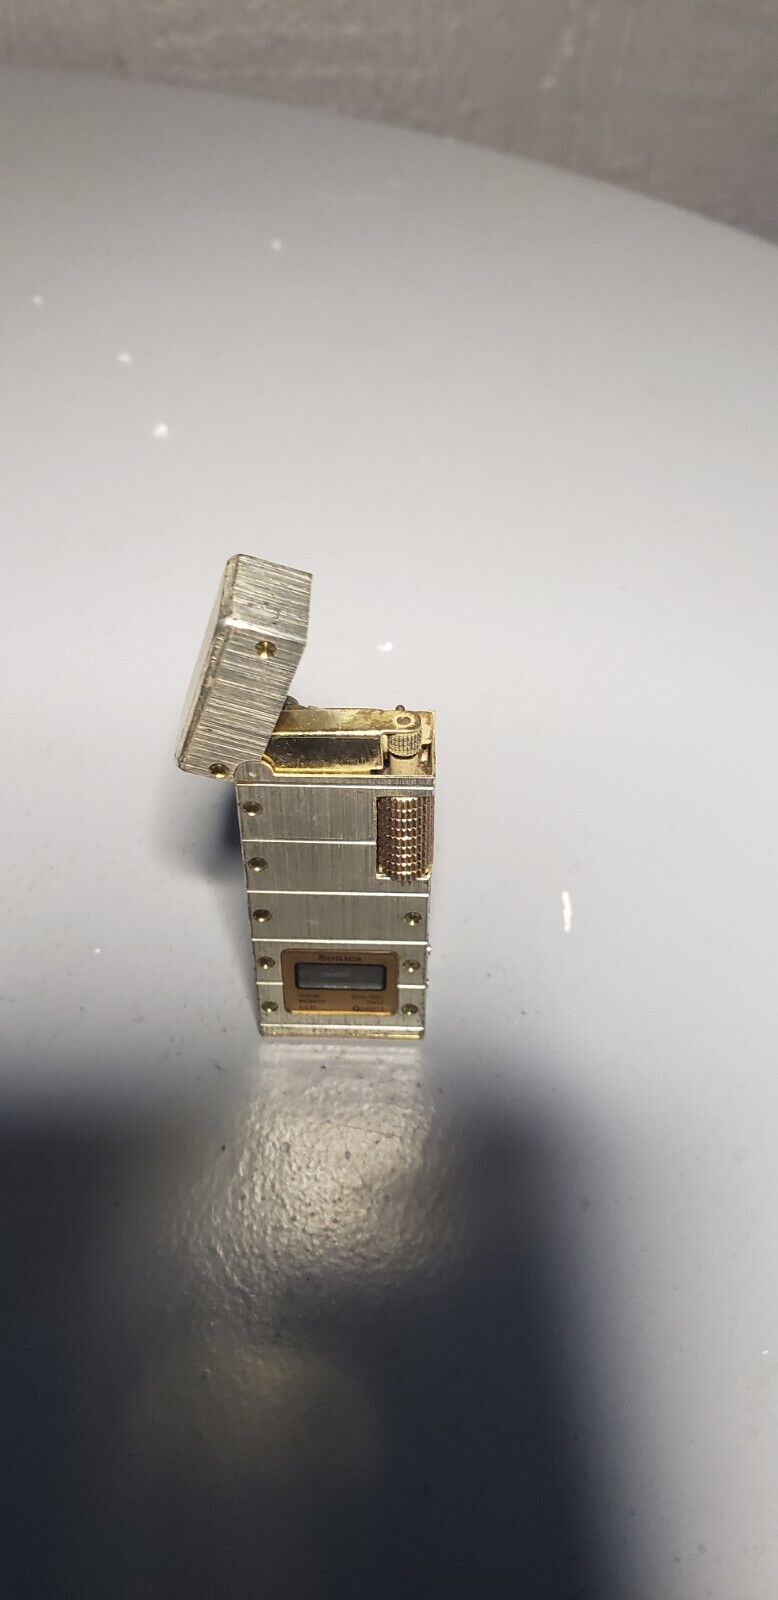 Sonica Butane Cigarette Lighter Clock Quartz Watch Japan Very Rare Gold